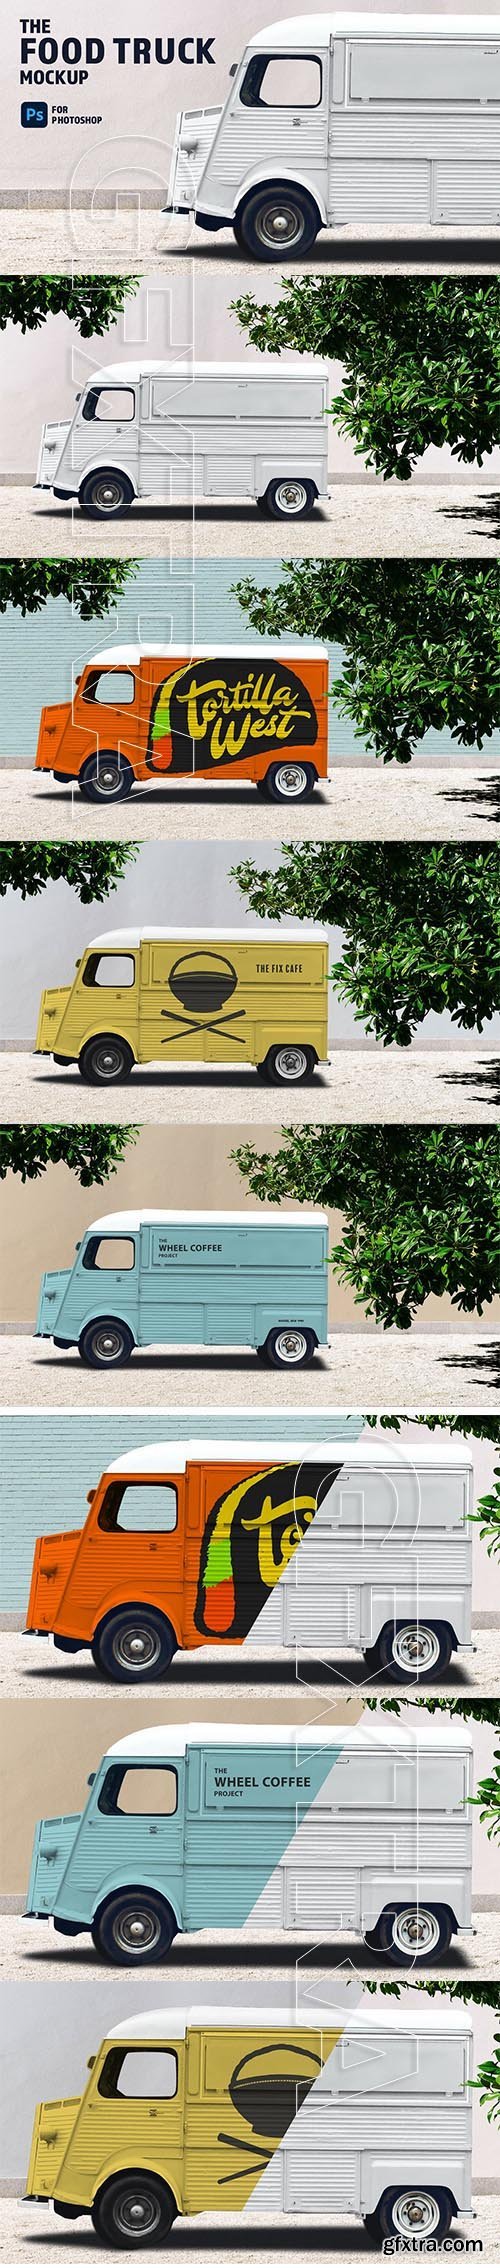 CreativeMarket - Food Truck Branding Mockup 5735423